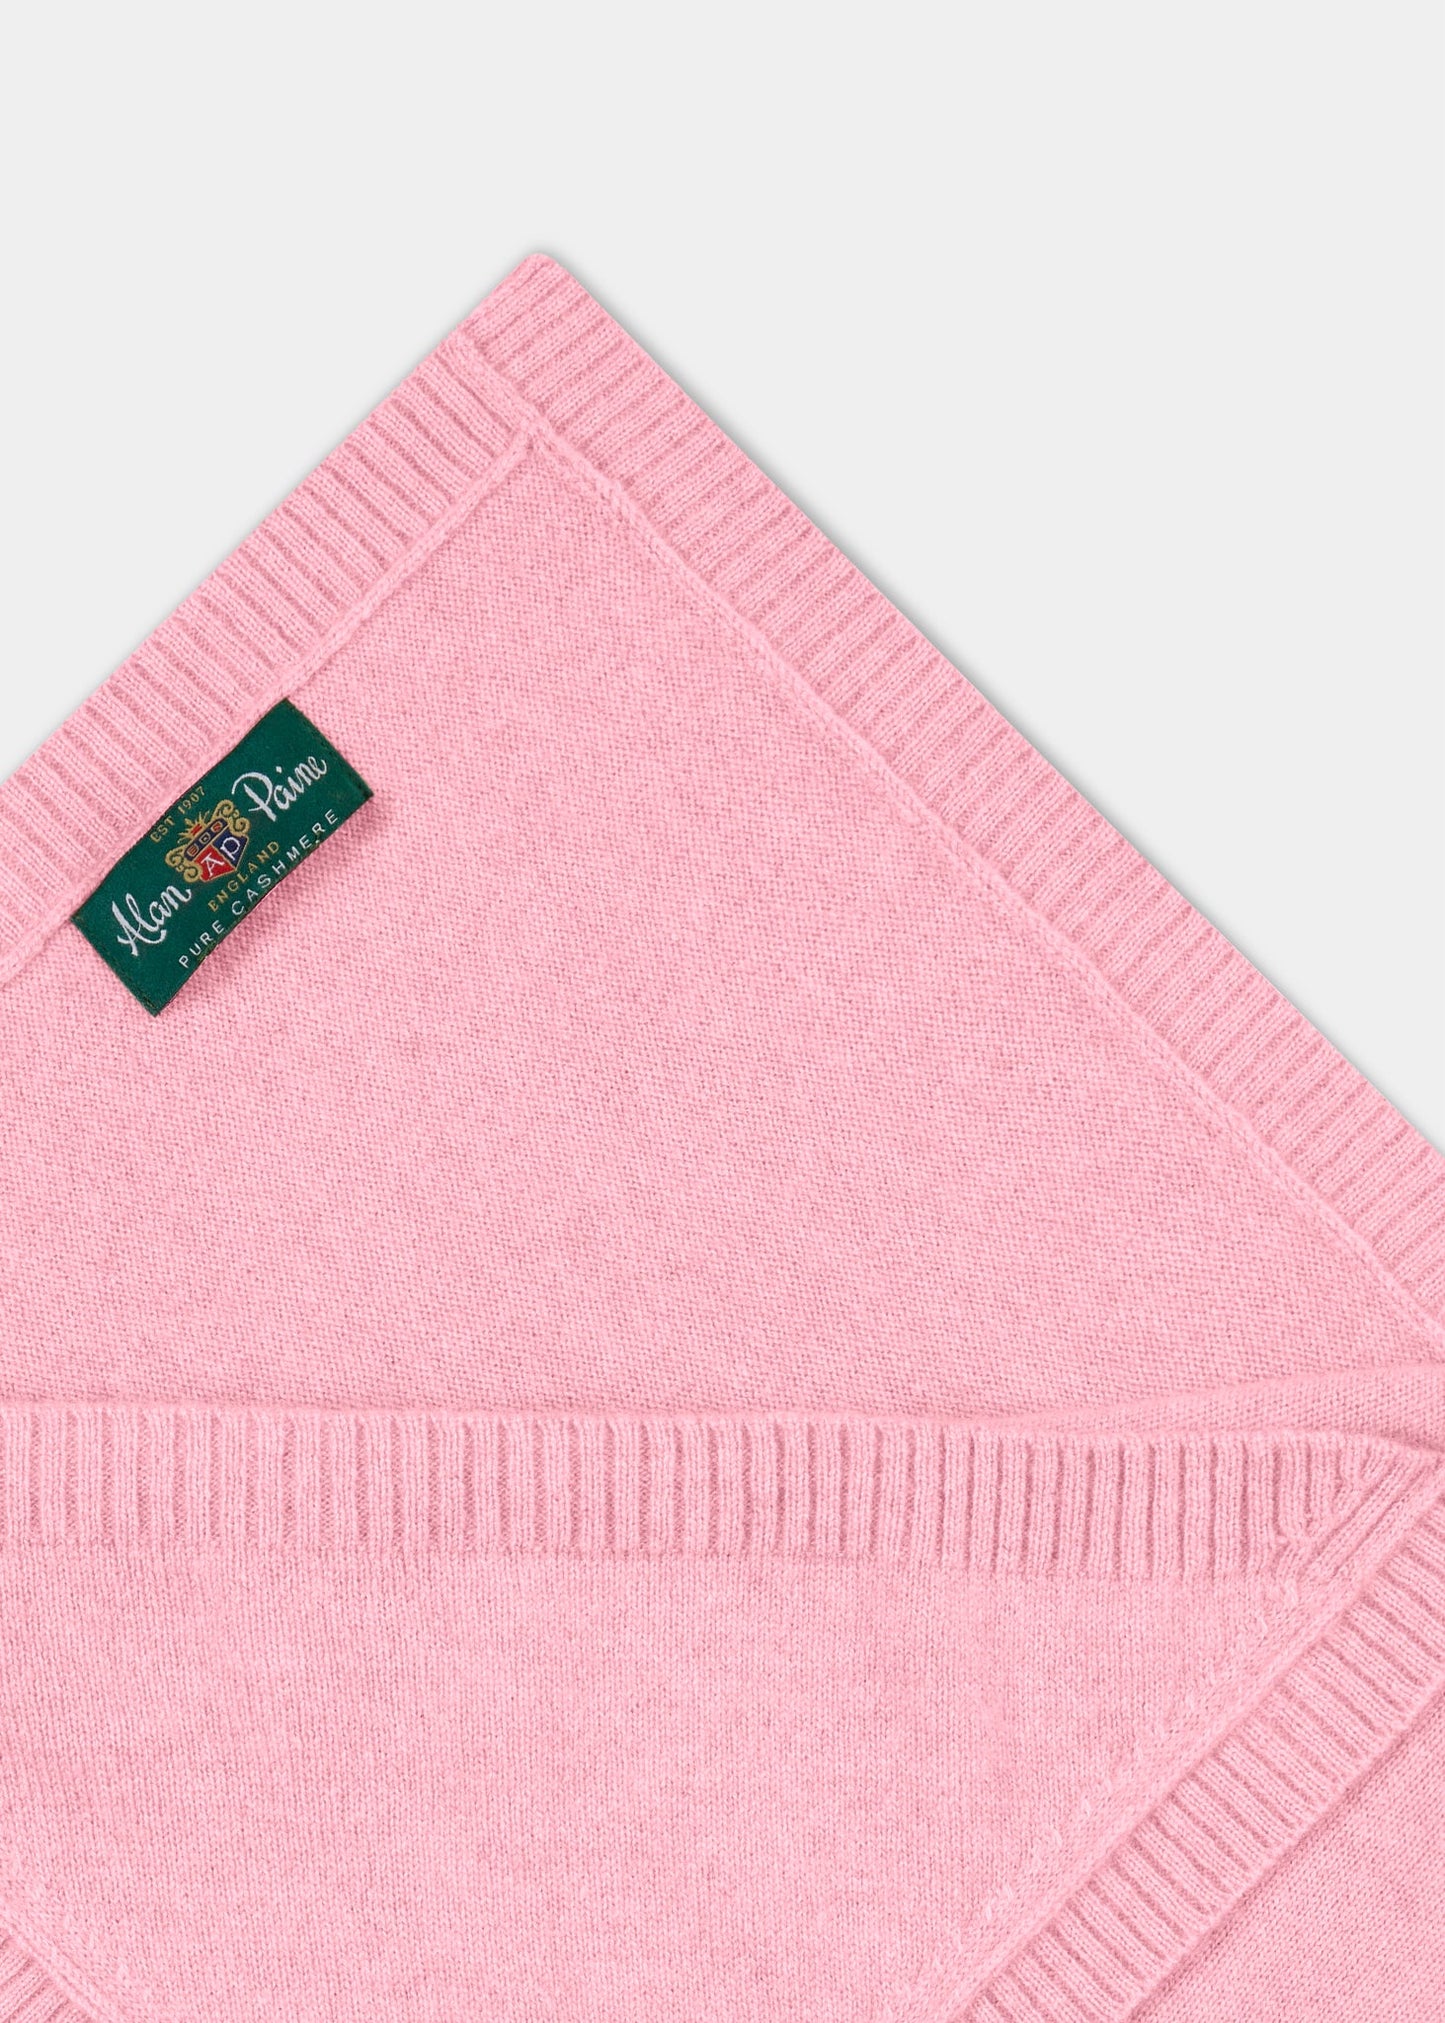 Cashmere Baby Blanket - Pink